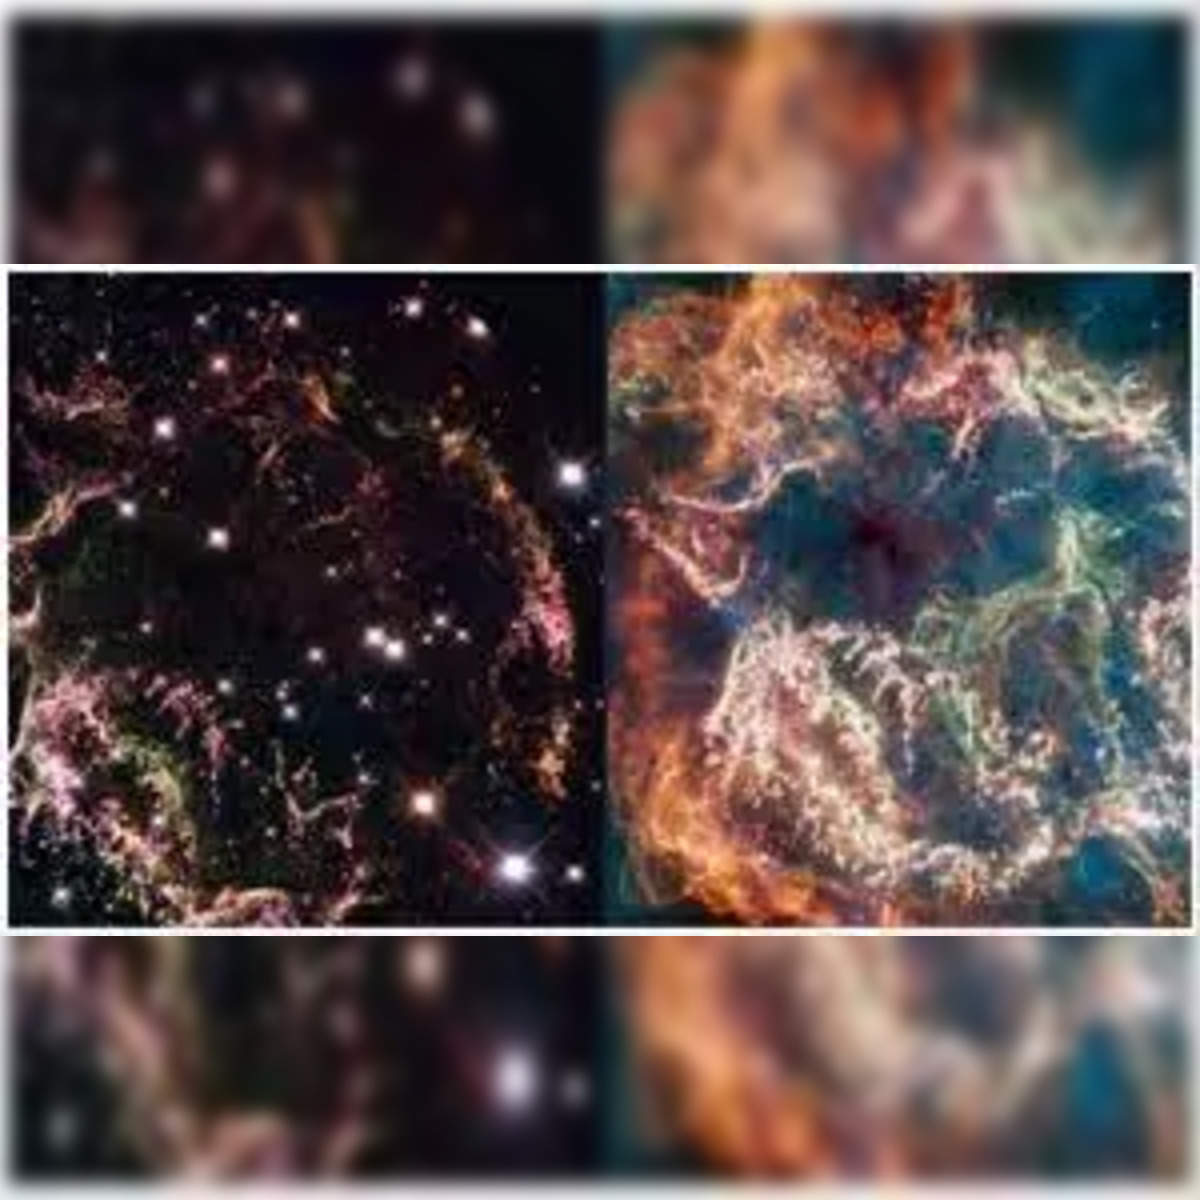 Astronomers closer to understanding 'green monster' in supernova remnants